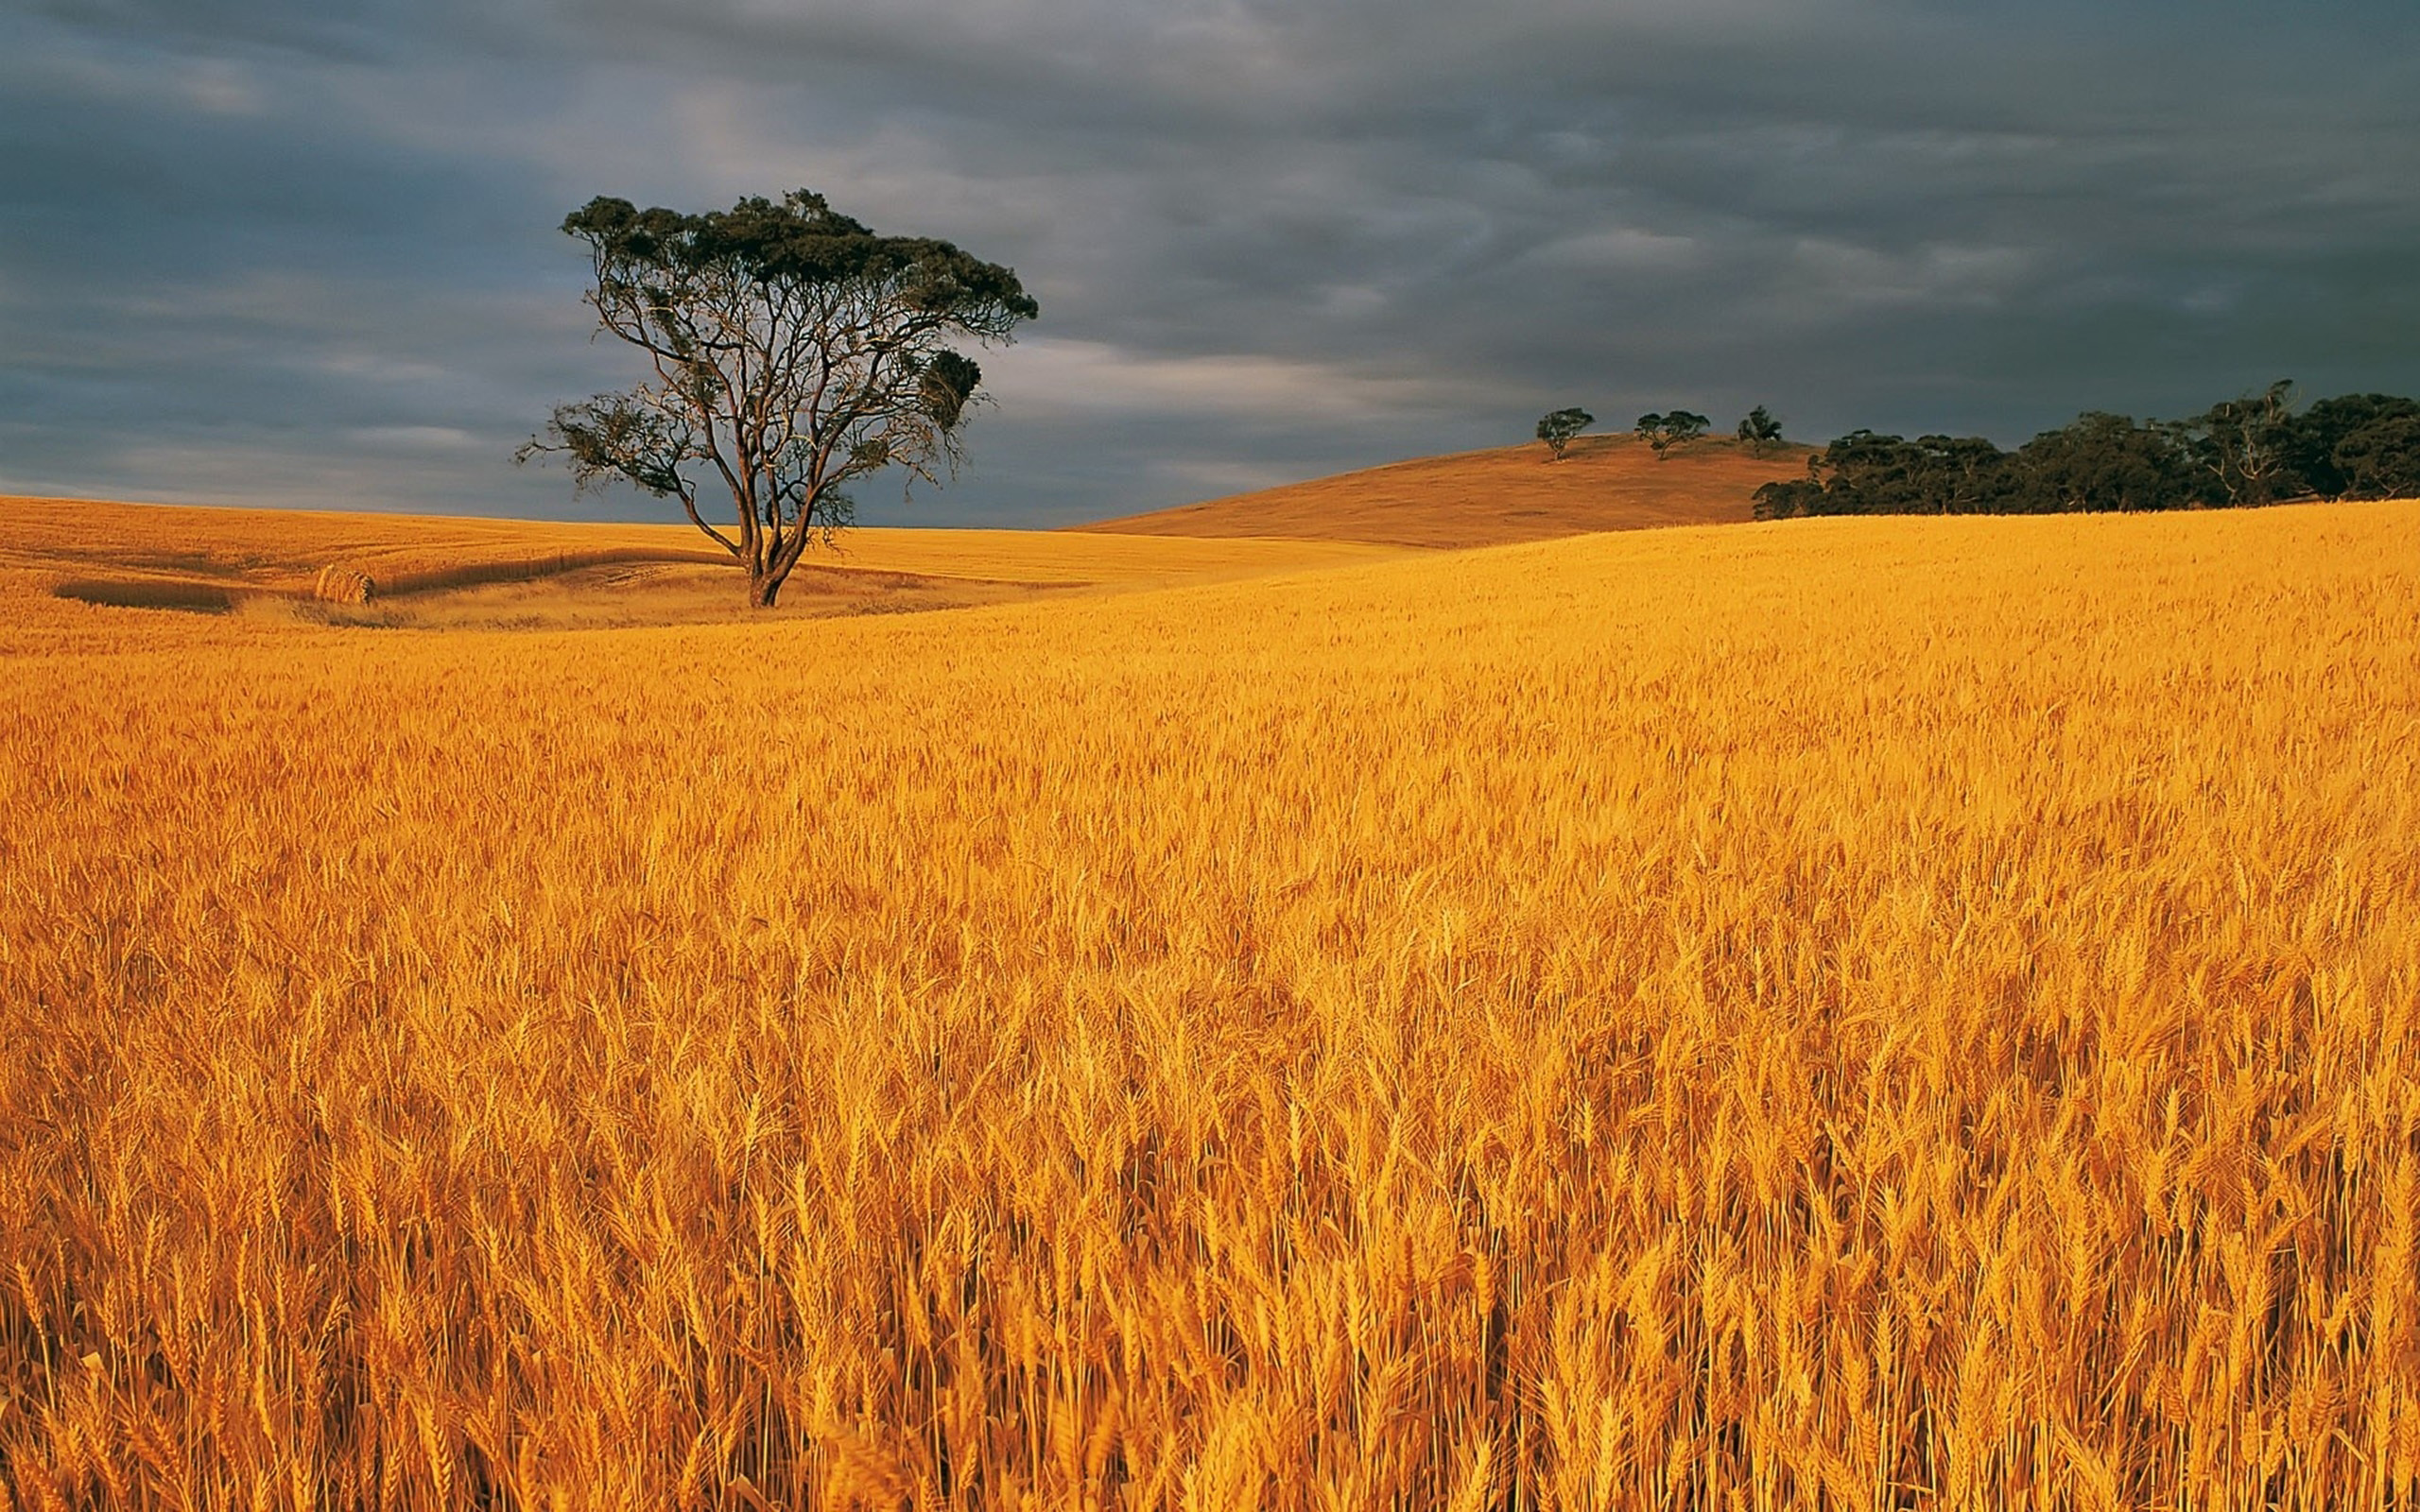 In northern india they harvest their wheat. Сельское хозяйство в Австралии пшеница. Сельское хозяйство Австралии поля кукурузы. Пшеничный пояс Австралии. Злаковые культуры Австралии.